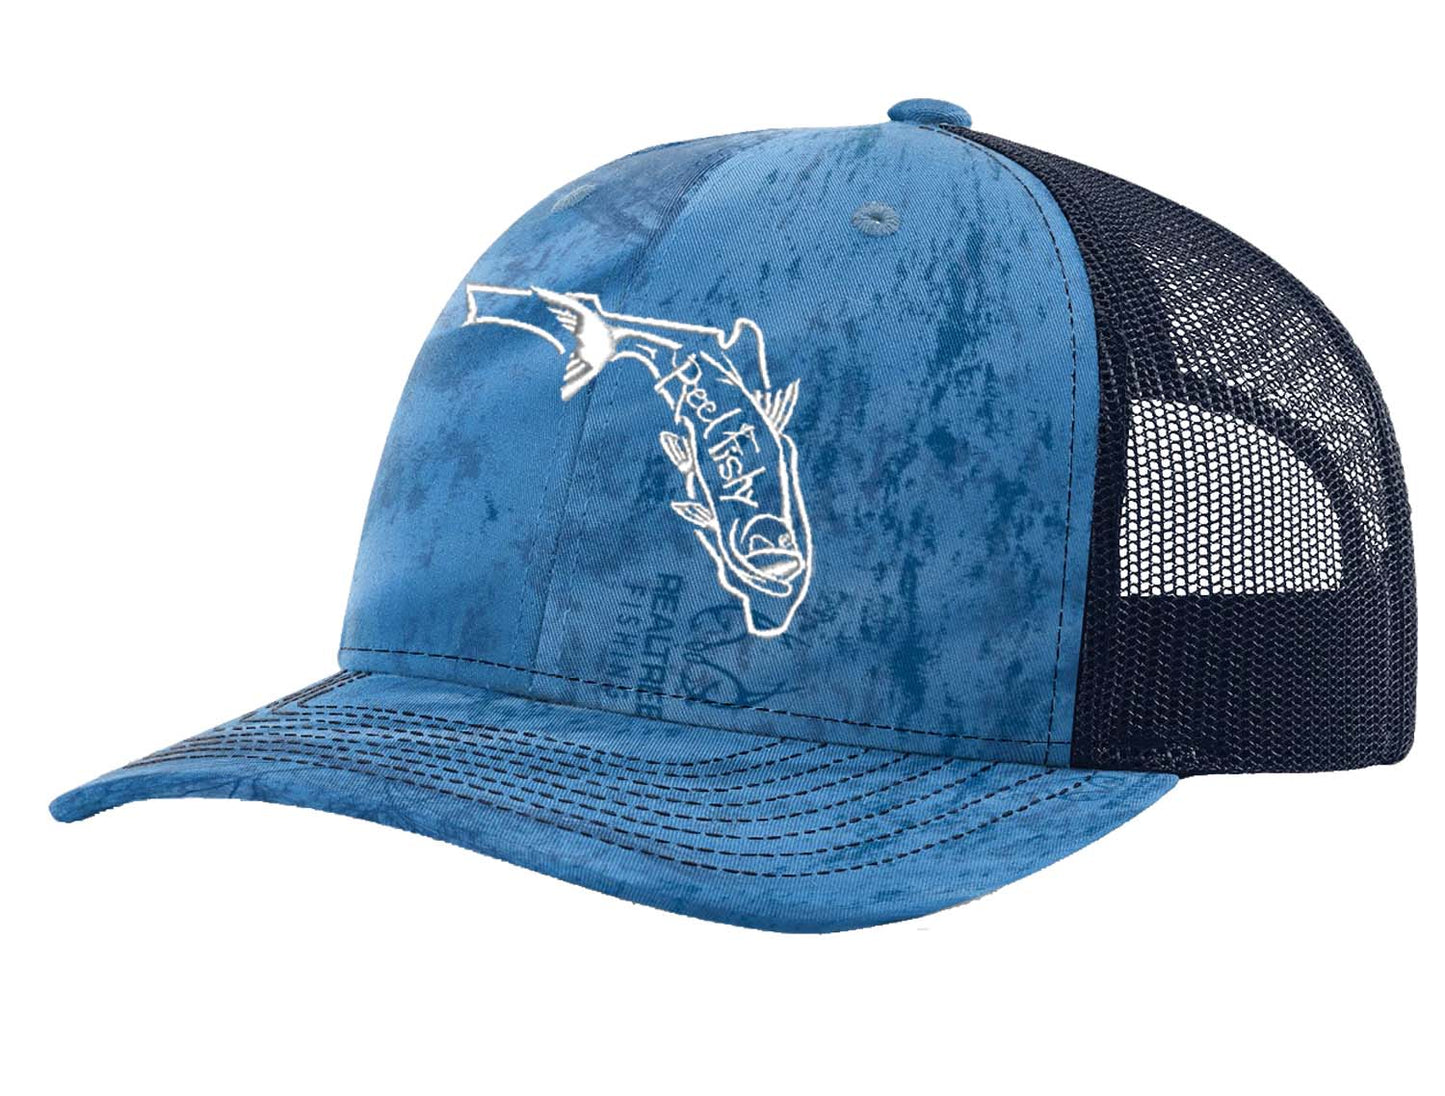 Realtree Blue/Navy Trucker Hat - State of Florida Reel Fishy Tarpon logo